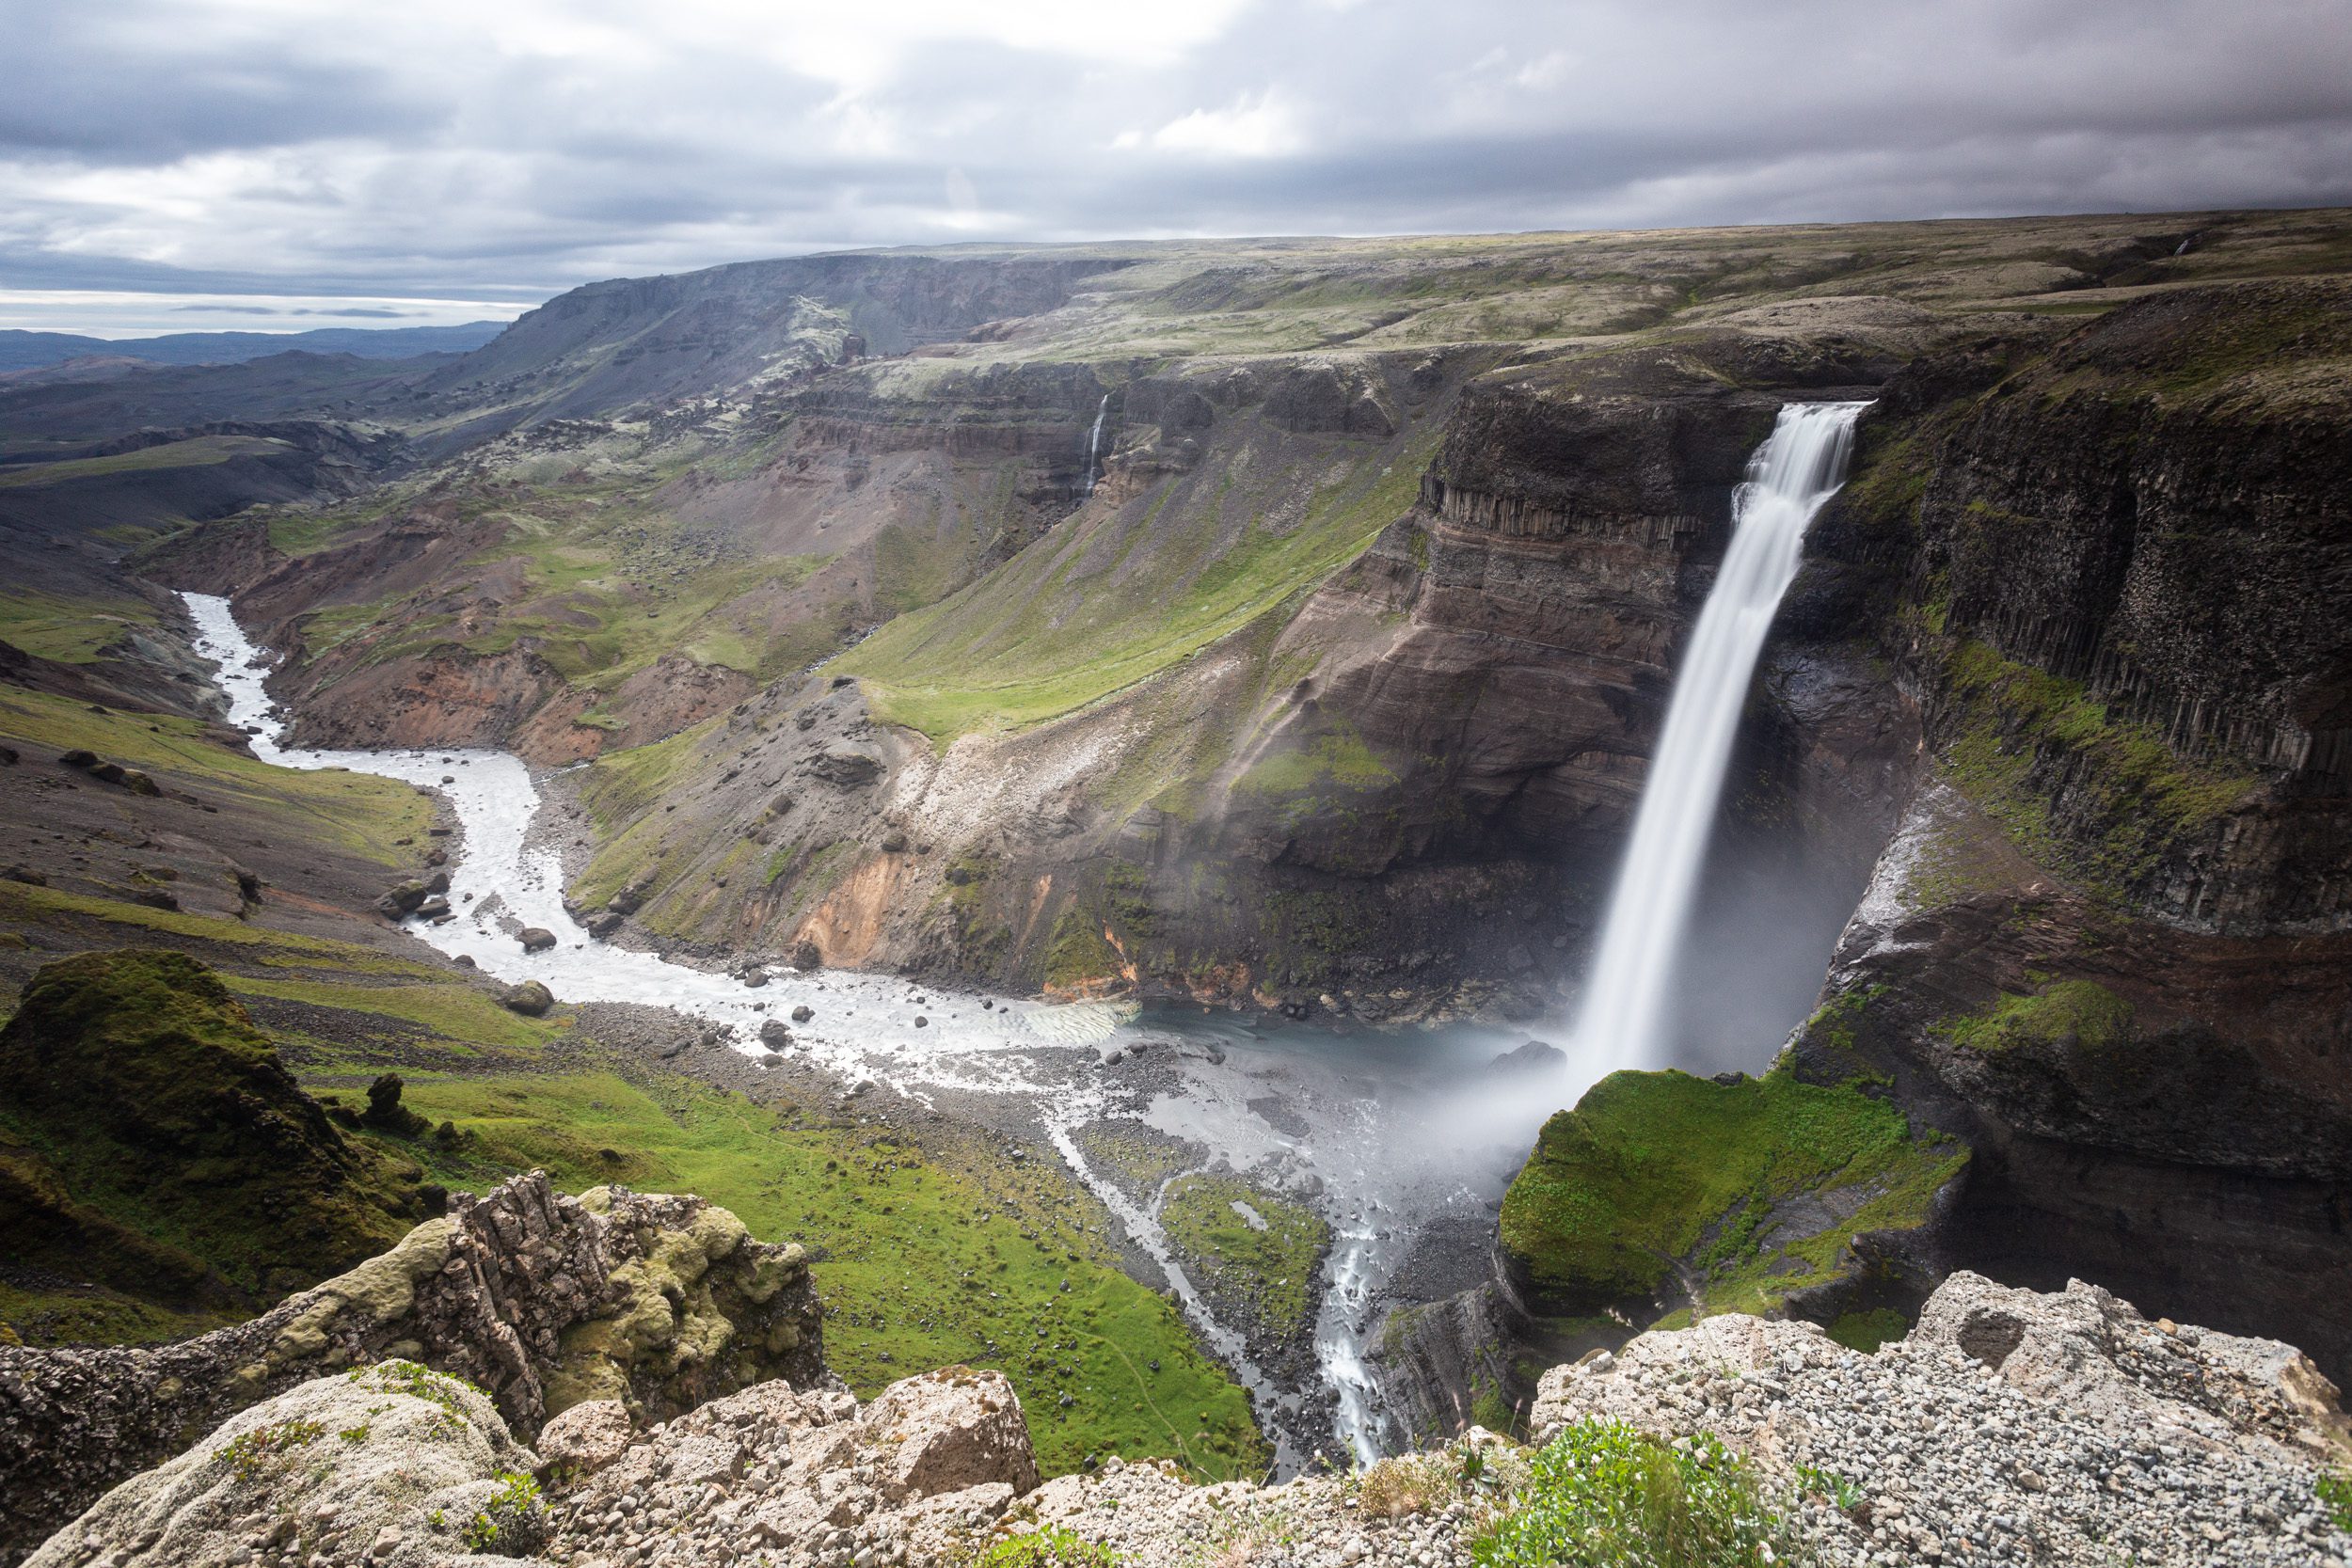 Exploring the Icelandic Highlands